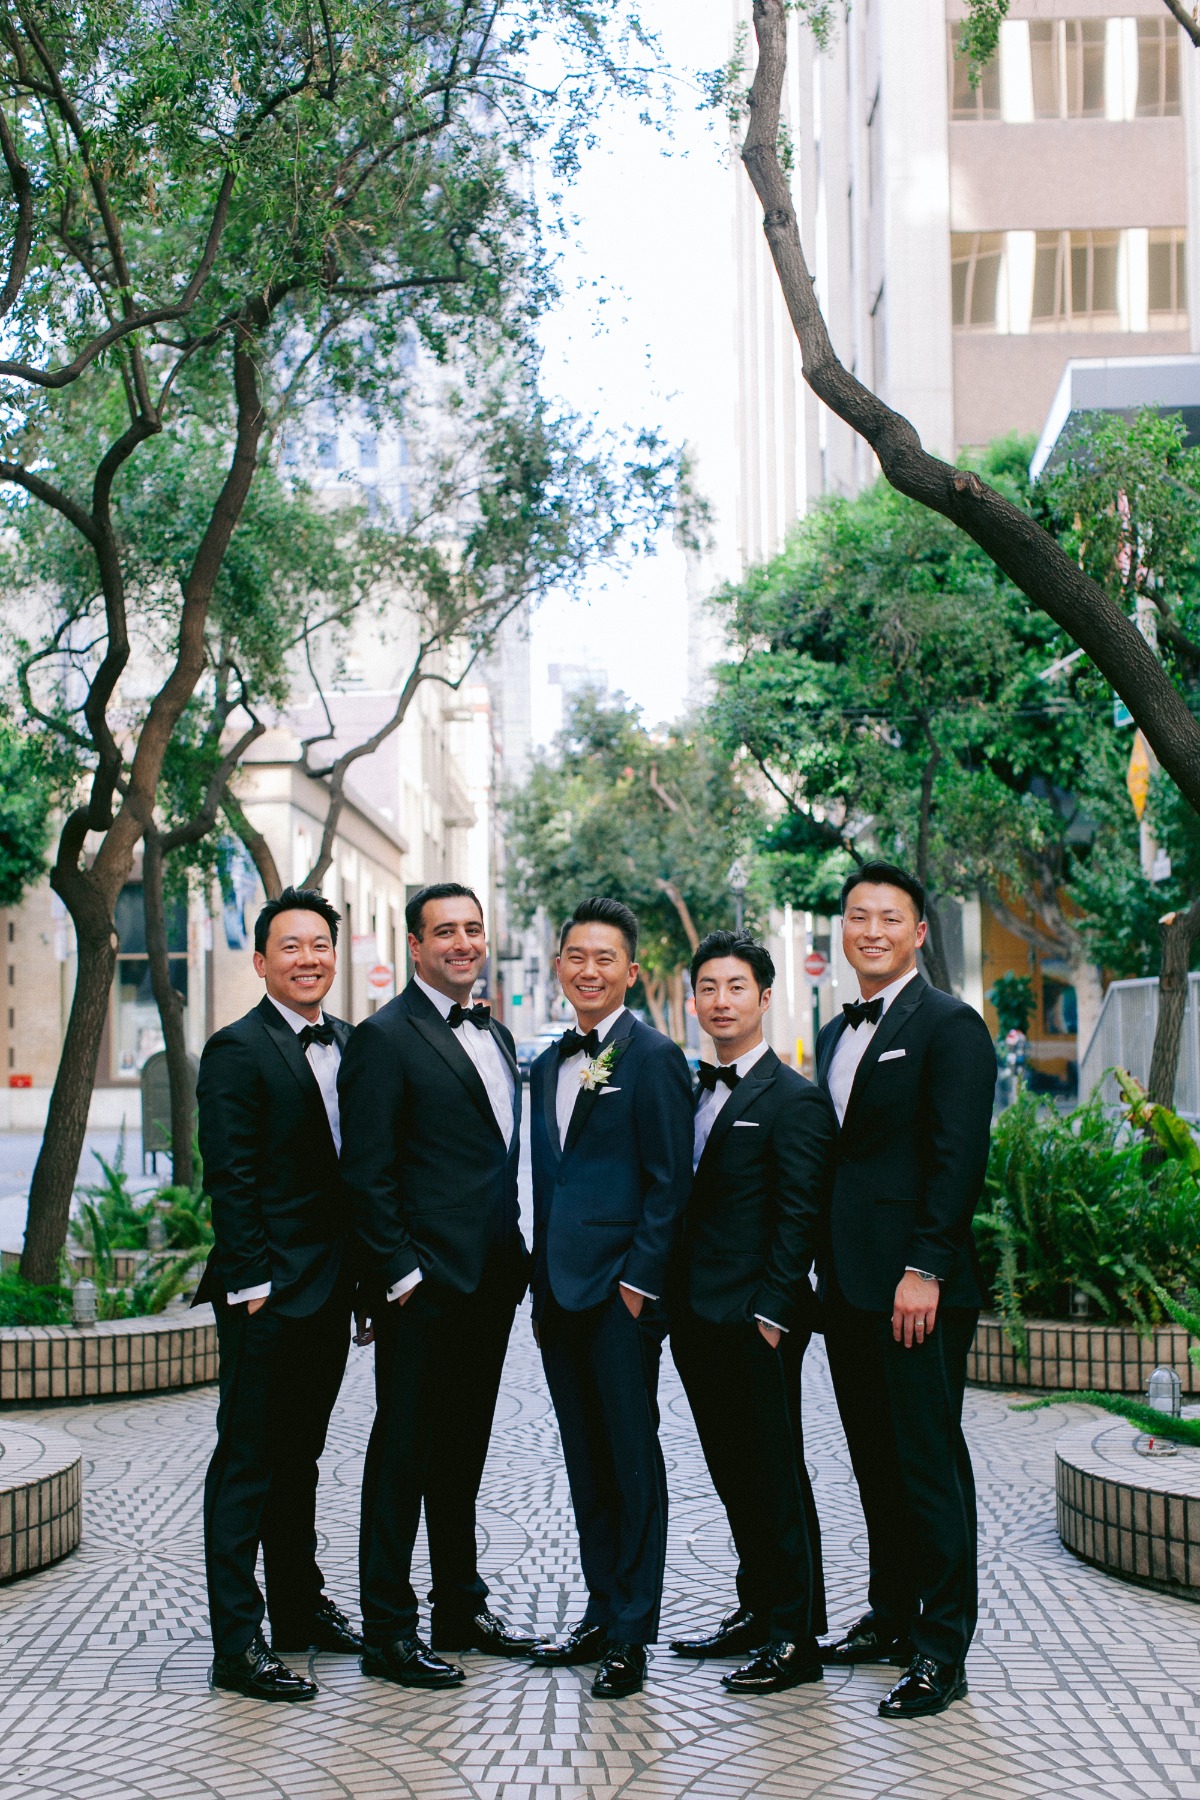 groomsmen in black tuxedos